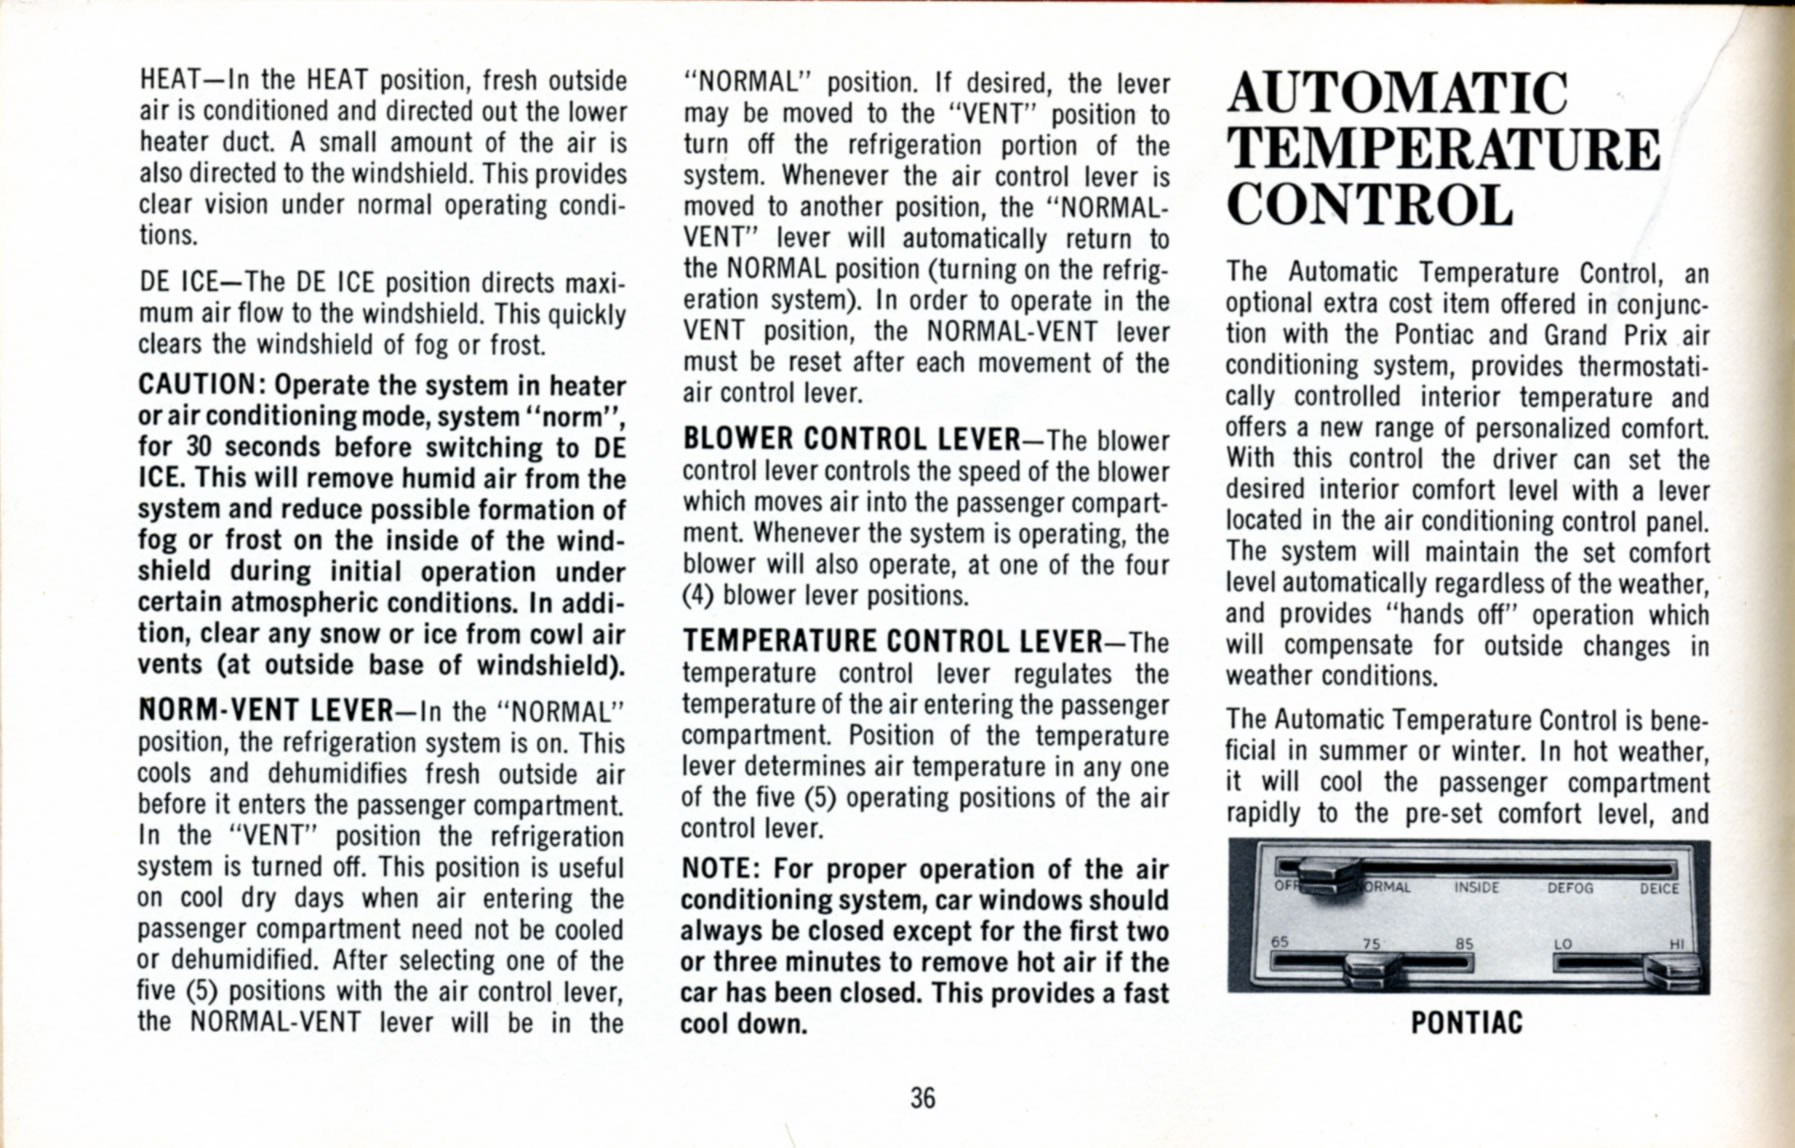 1969_Pontiac_Owners_Manual-36